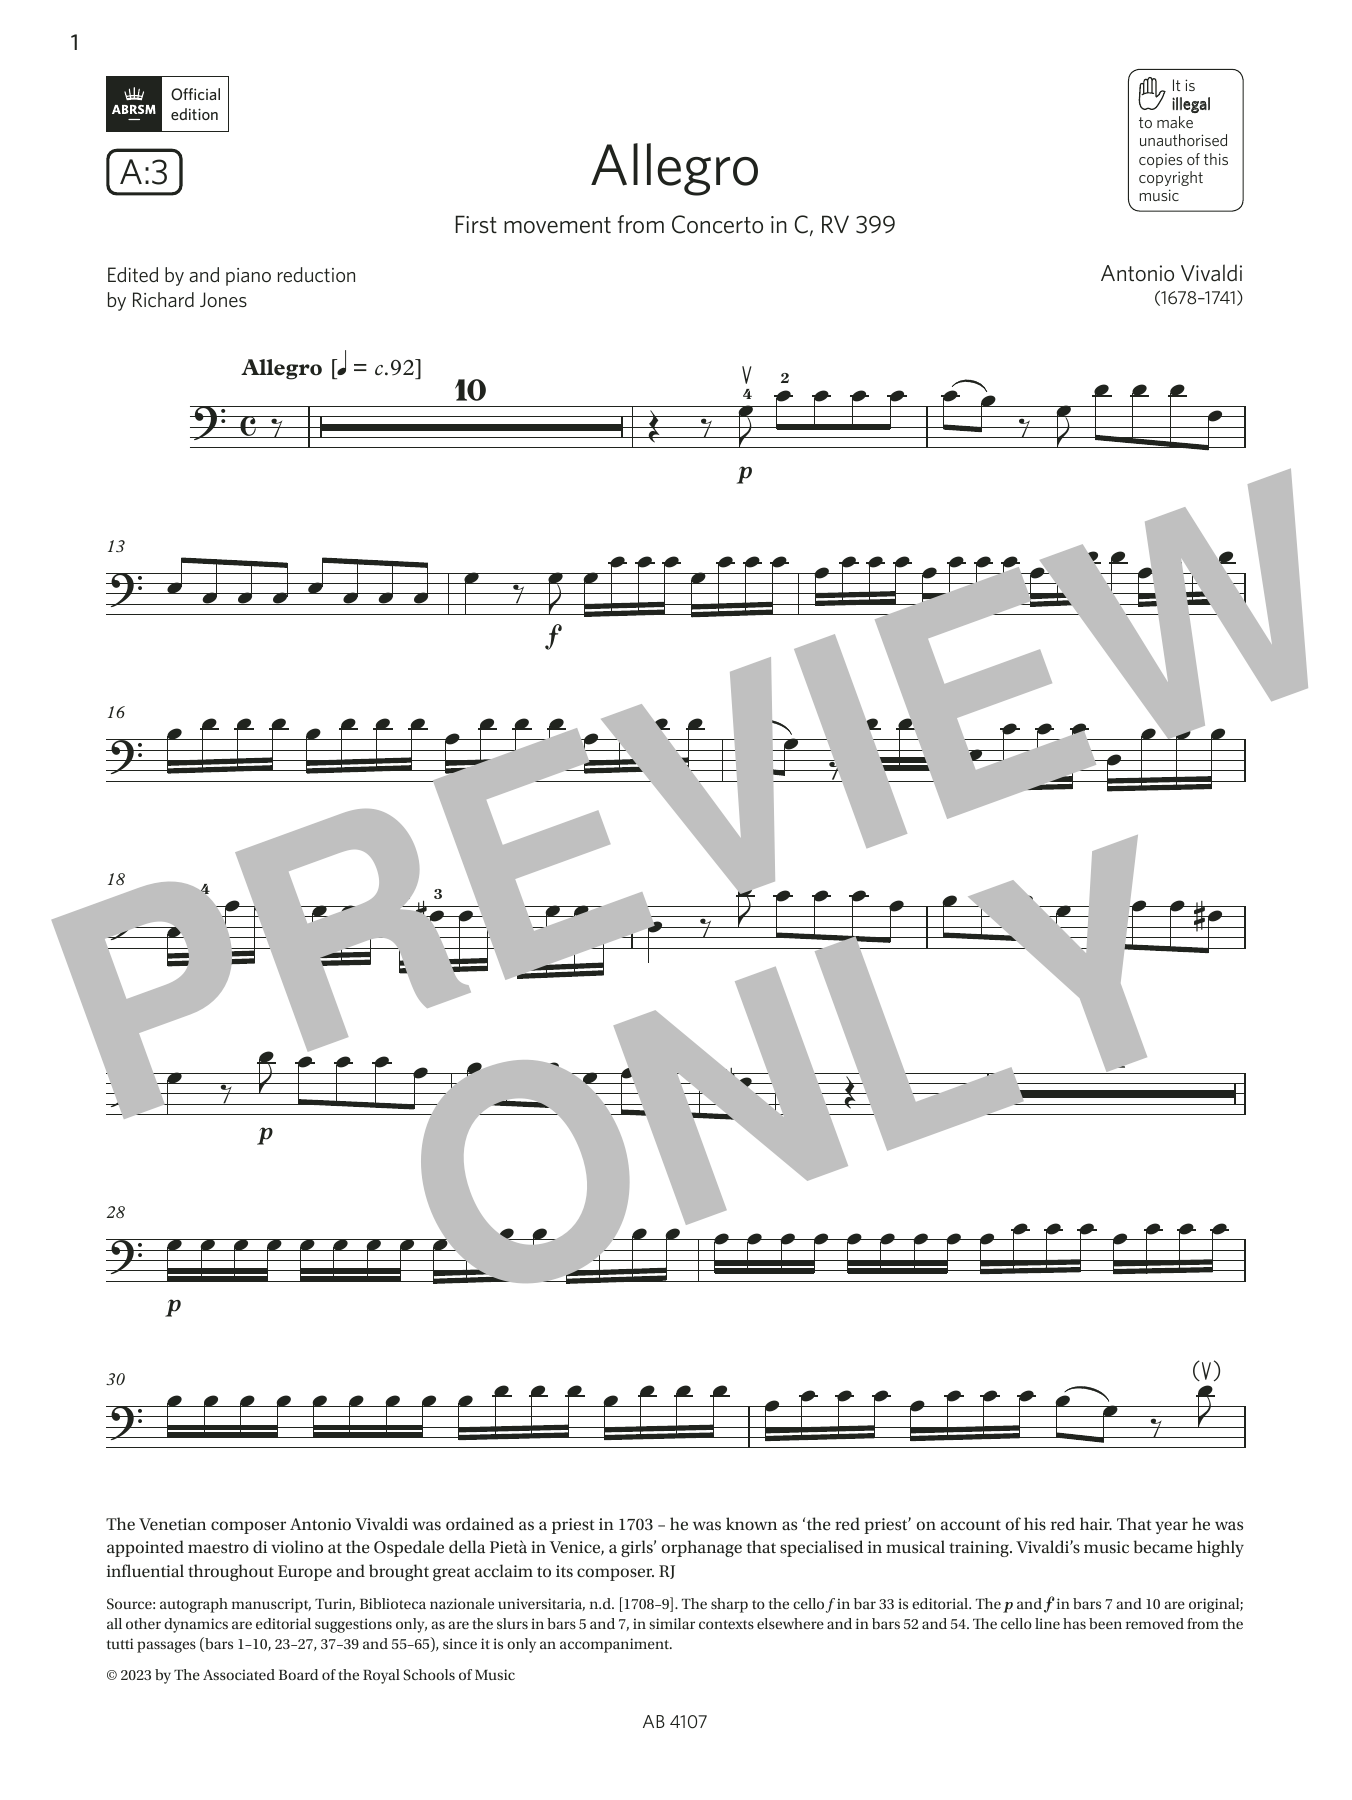 Antonio Vivaldi Allegro (Grade 4, A3, from the ABRSM Cello Syllabus from 2024) Sheet Music Notes & Chords for Cello Solo - Download or Print PDF